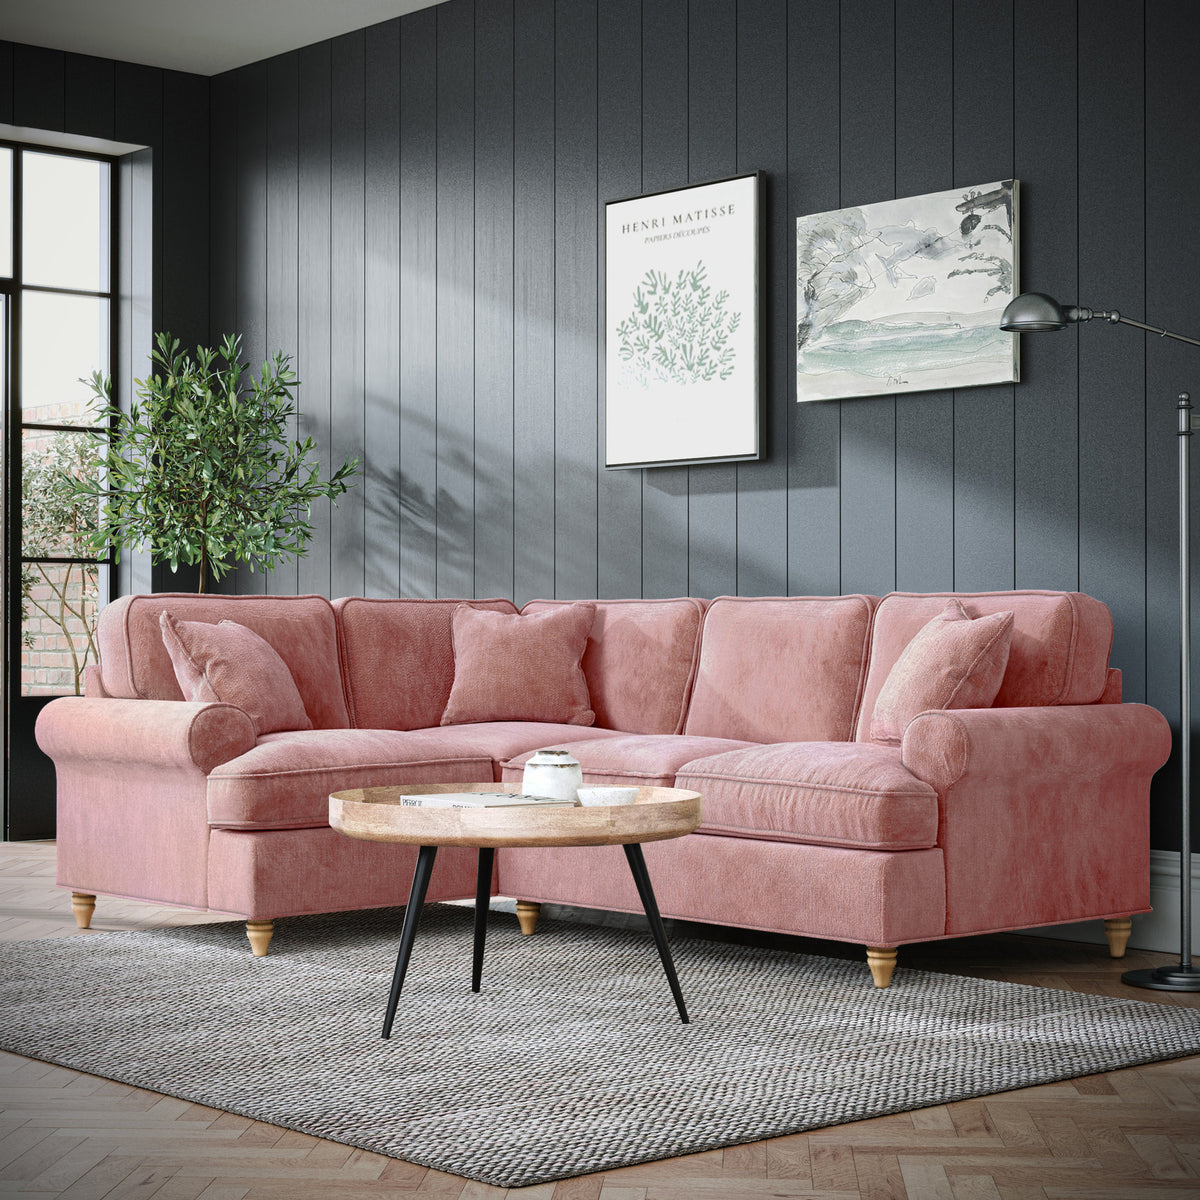 Alfie Plum Corner Sofa from Roseland Furniture